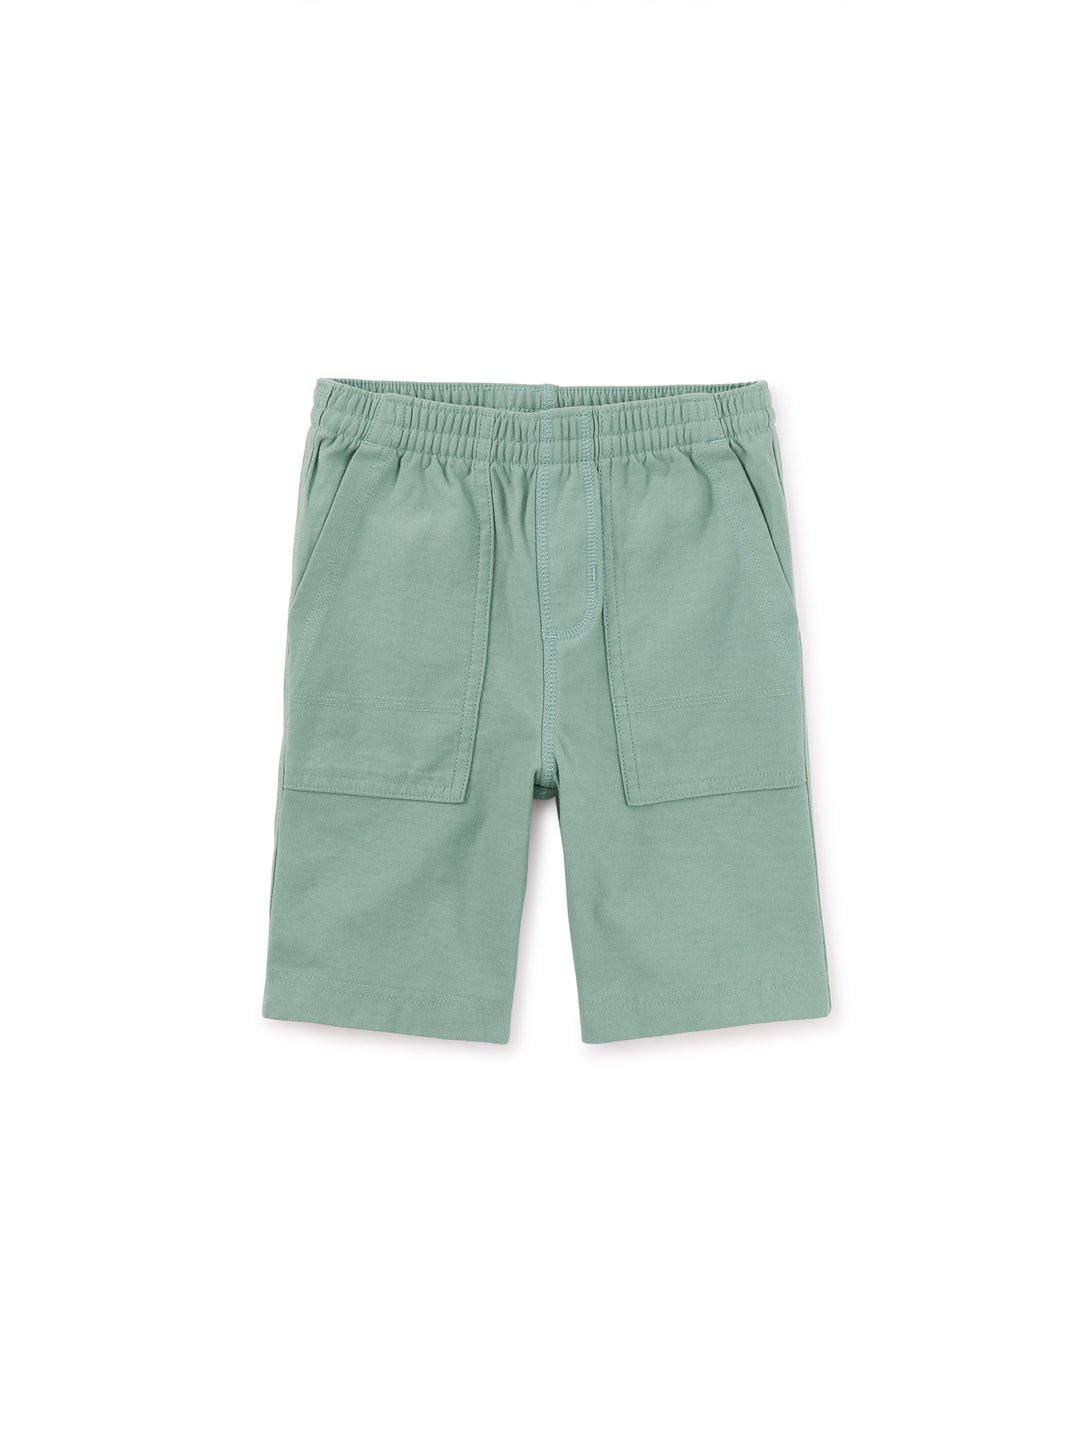 Tea Collection Playwear Shorts, Sea |Mockingbird Baby & Kids